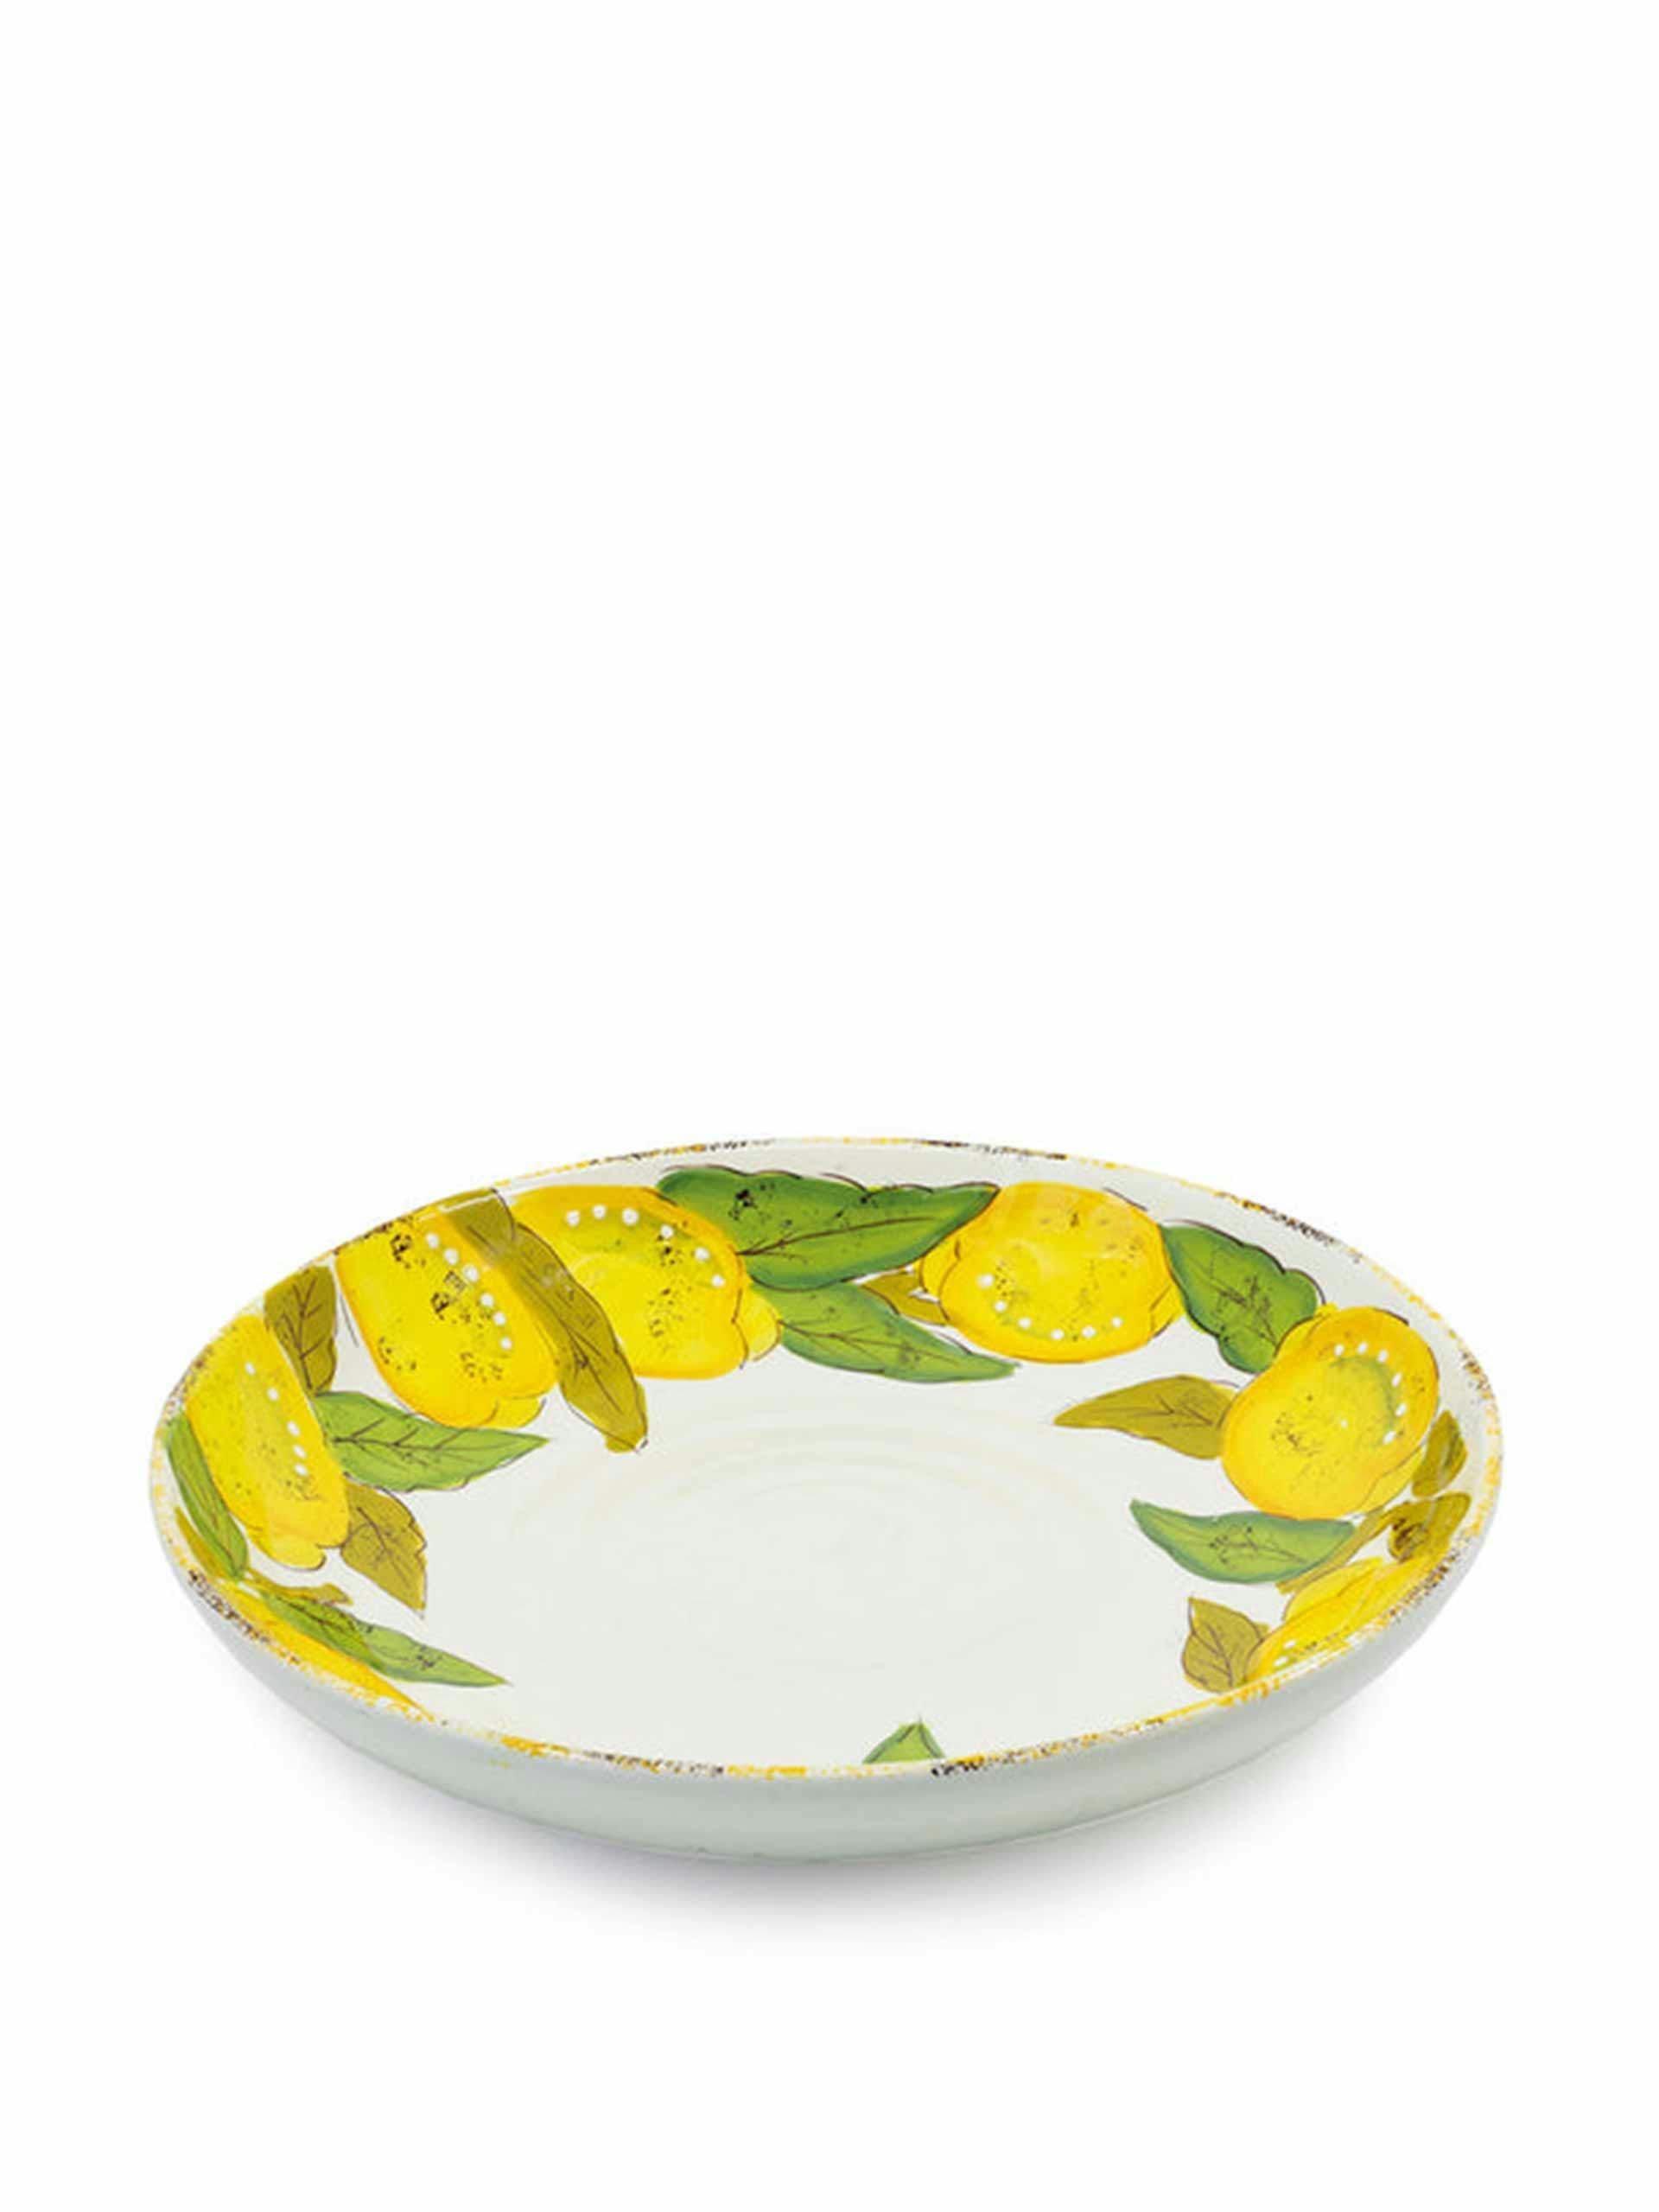 Ceramic lemon serving bowl